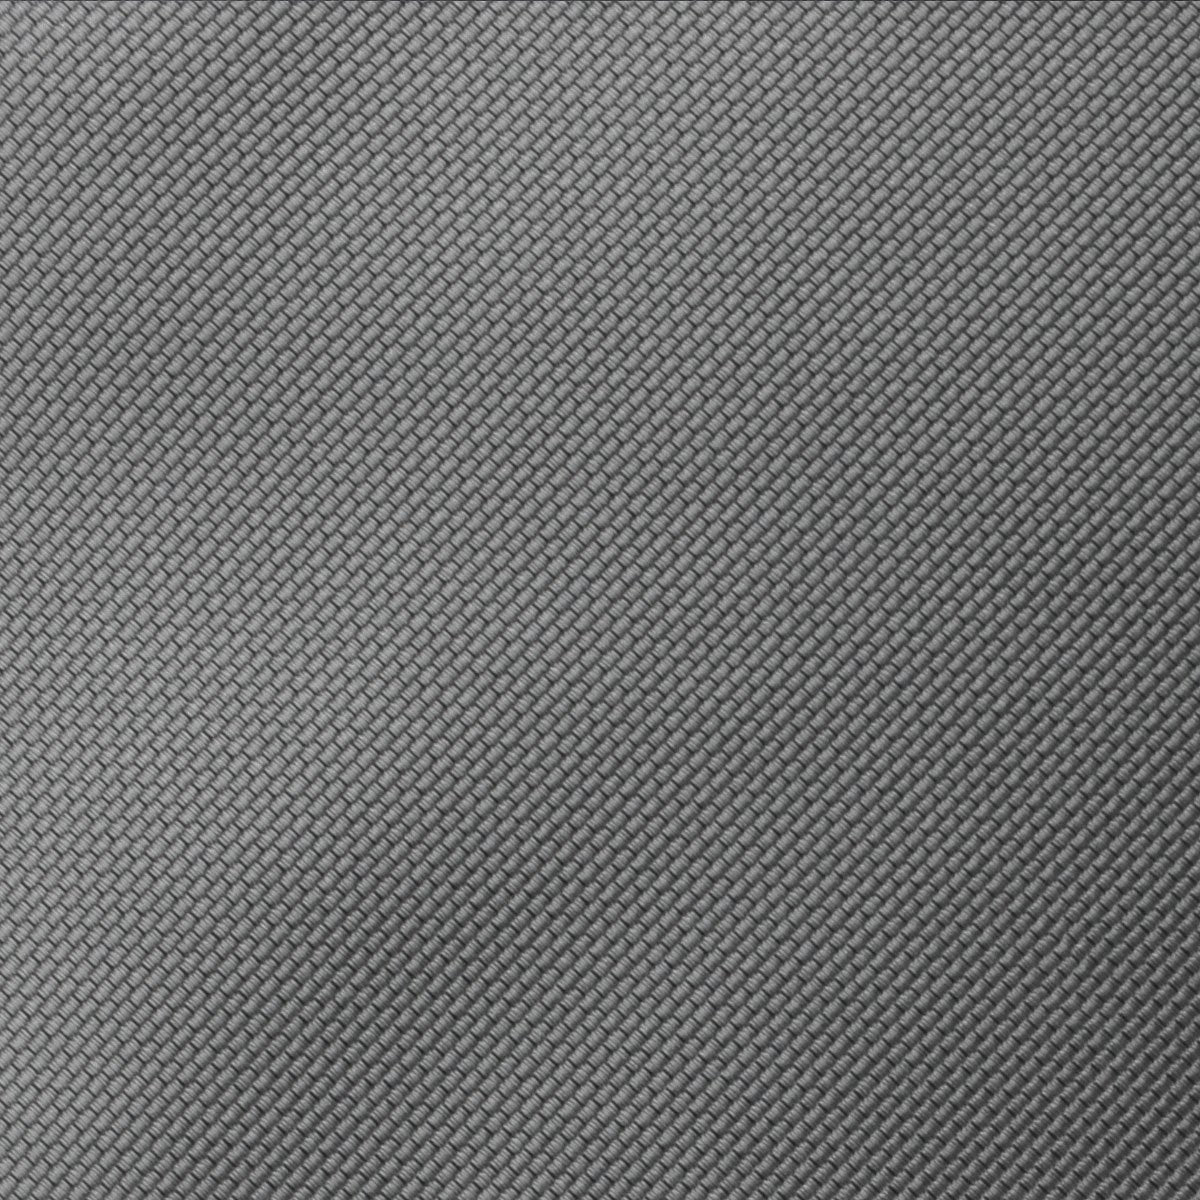 Mercury Grey Weave Necktie Fabric